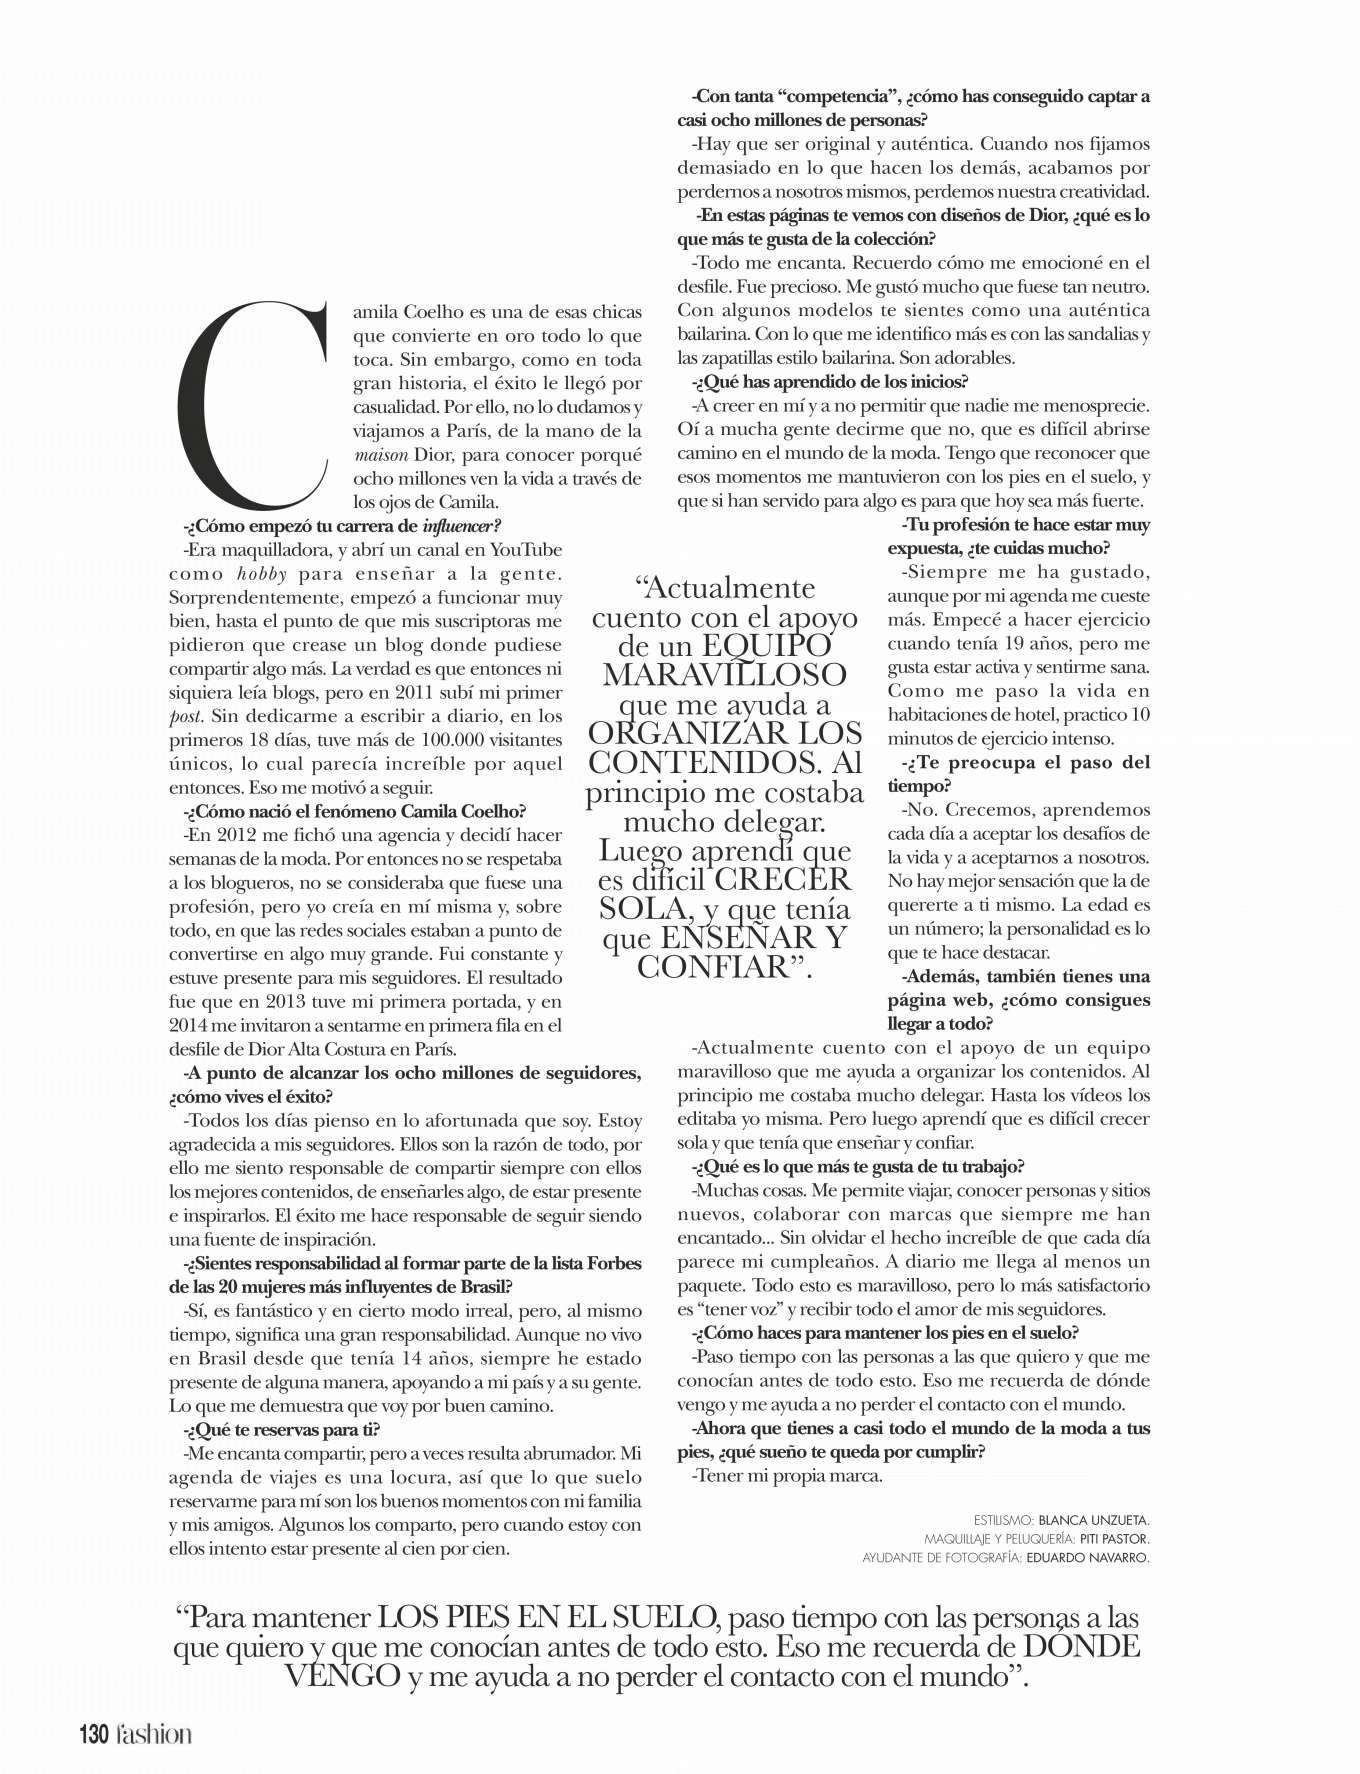 Camila Coelho â€“ Â¡Hola! Fashion Magazine (June 2019)